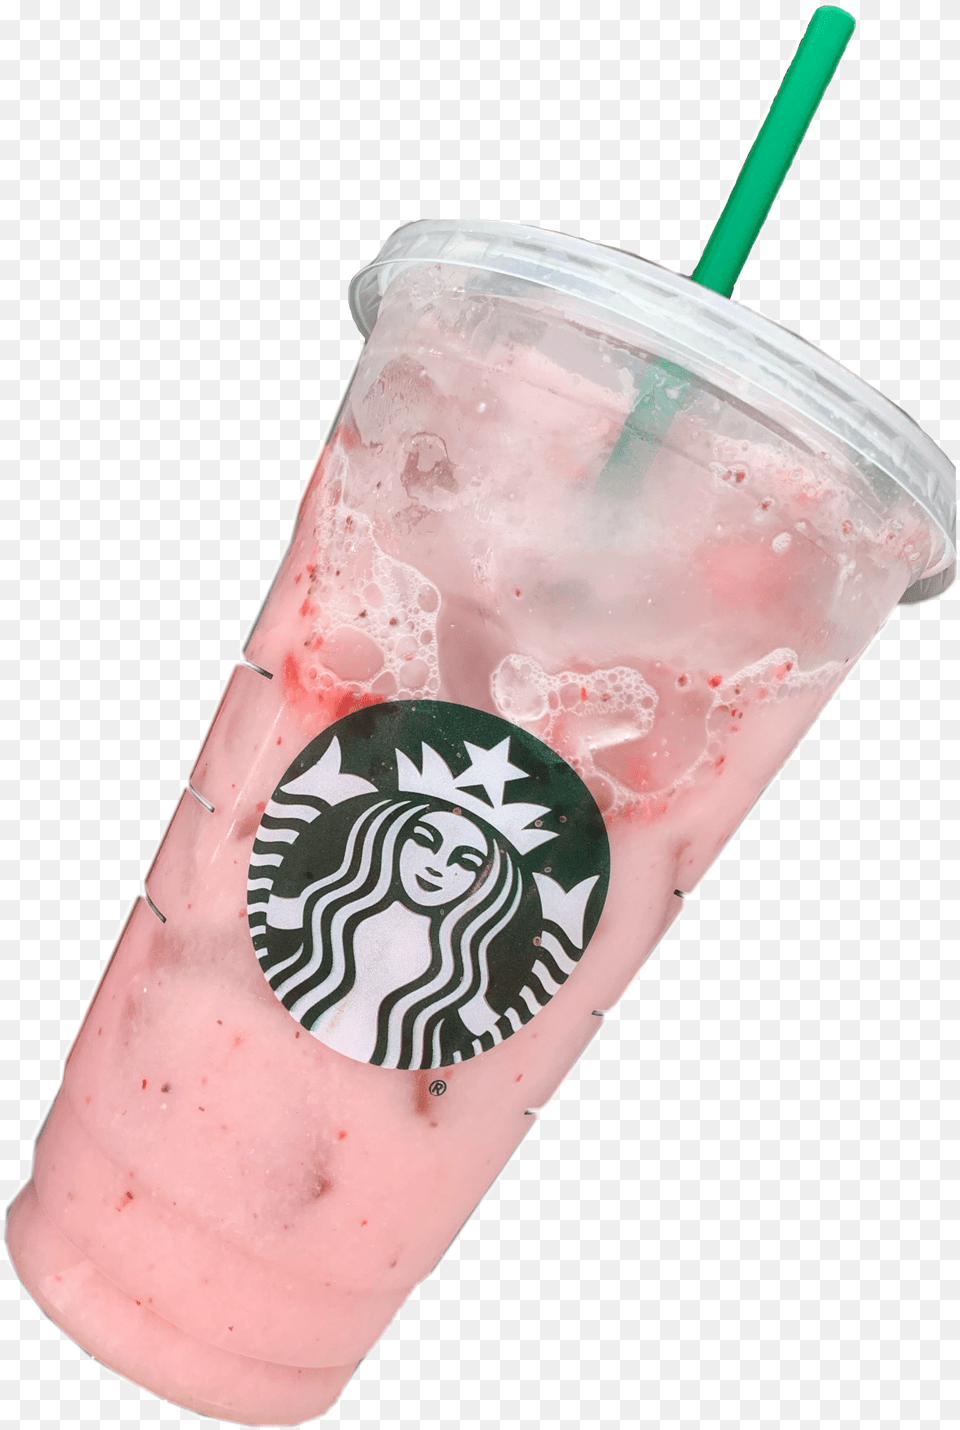 Starbucks Pinkitydrinkity Pink Sticker By Tatsroveto Aesthetic Starbucks Pink Drink, Beverage, Juice, Milk, Smoothie Png Image